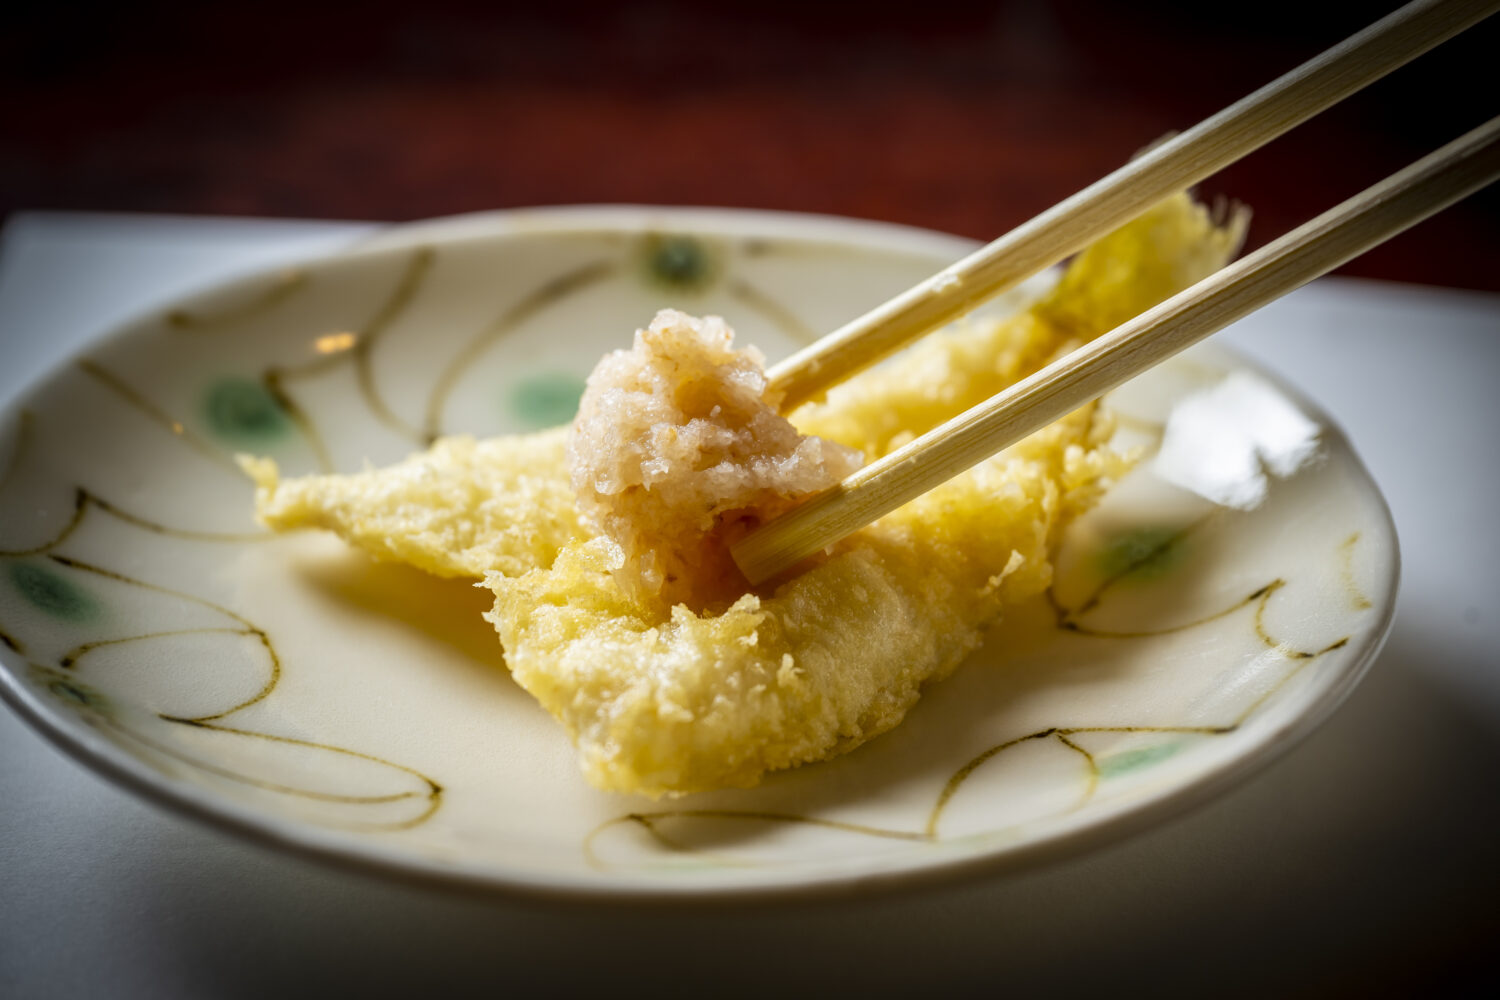 Using condiments: shio (salt), tentsuyu (tempura dipping sauce), and lemon